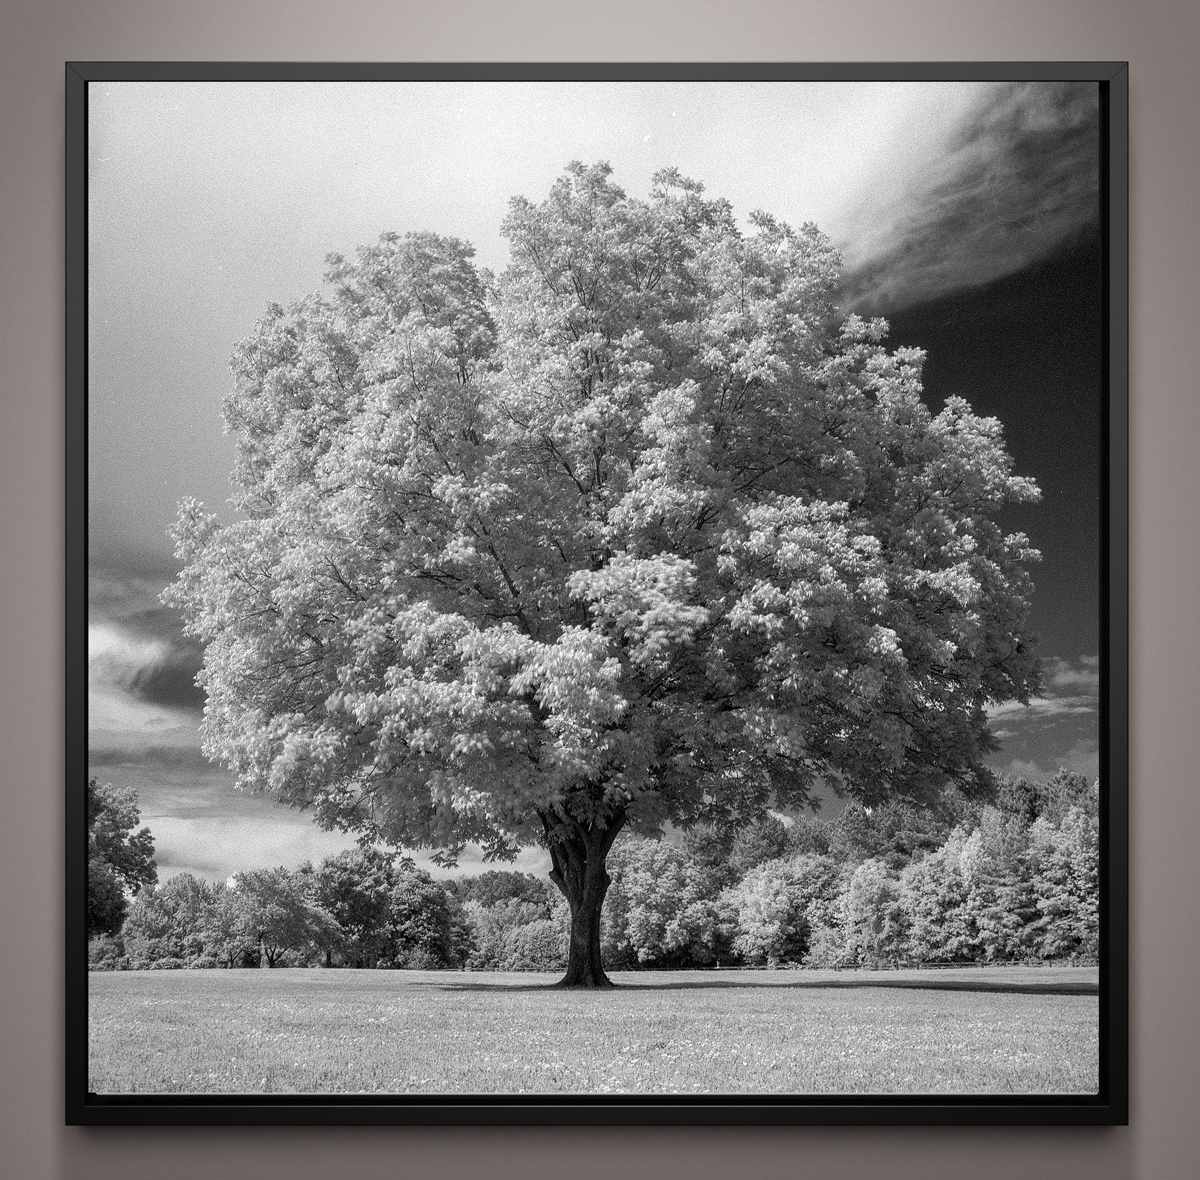 Tree image by Scott Allen